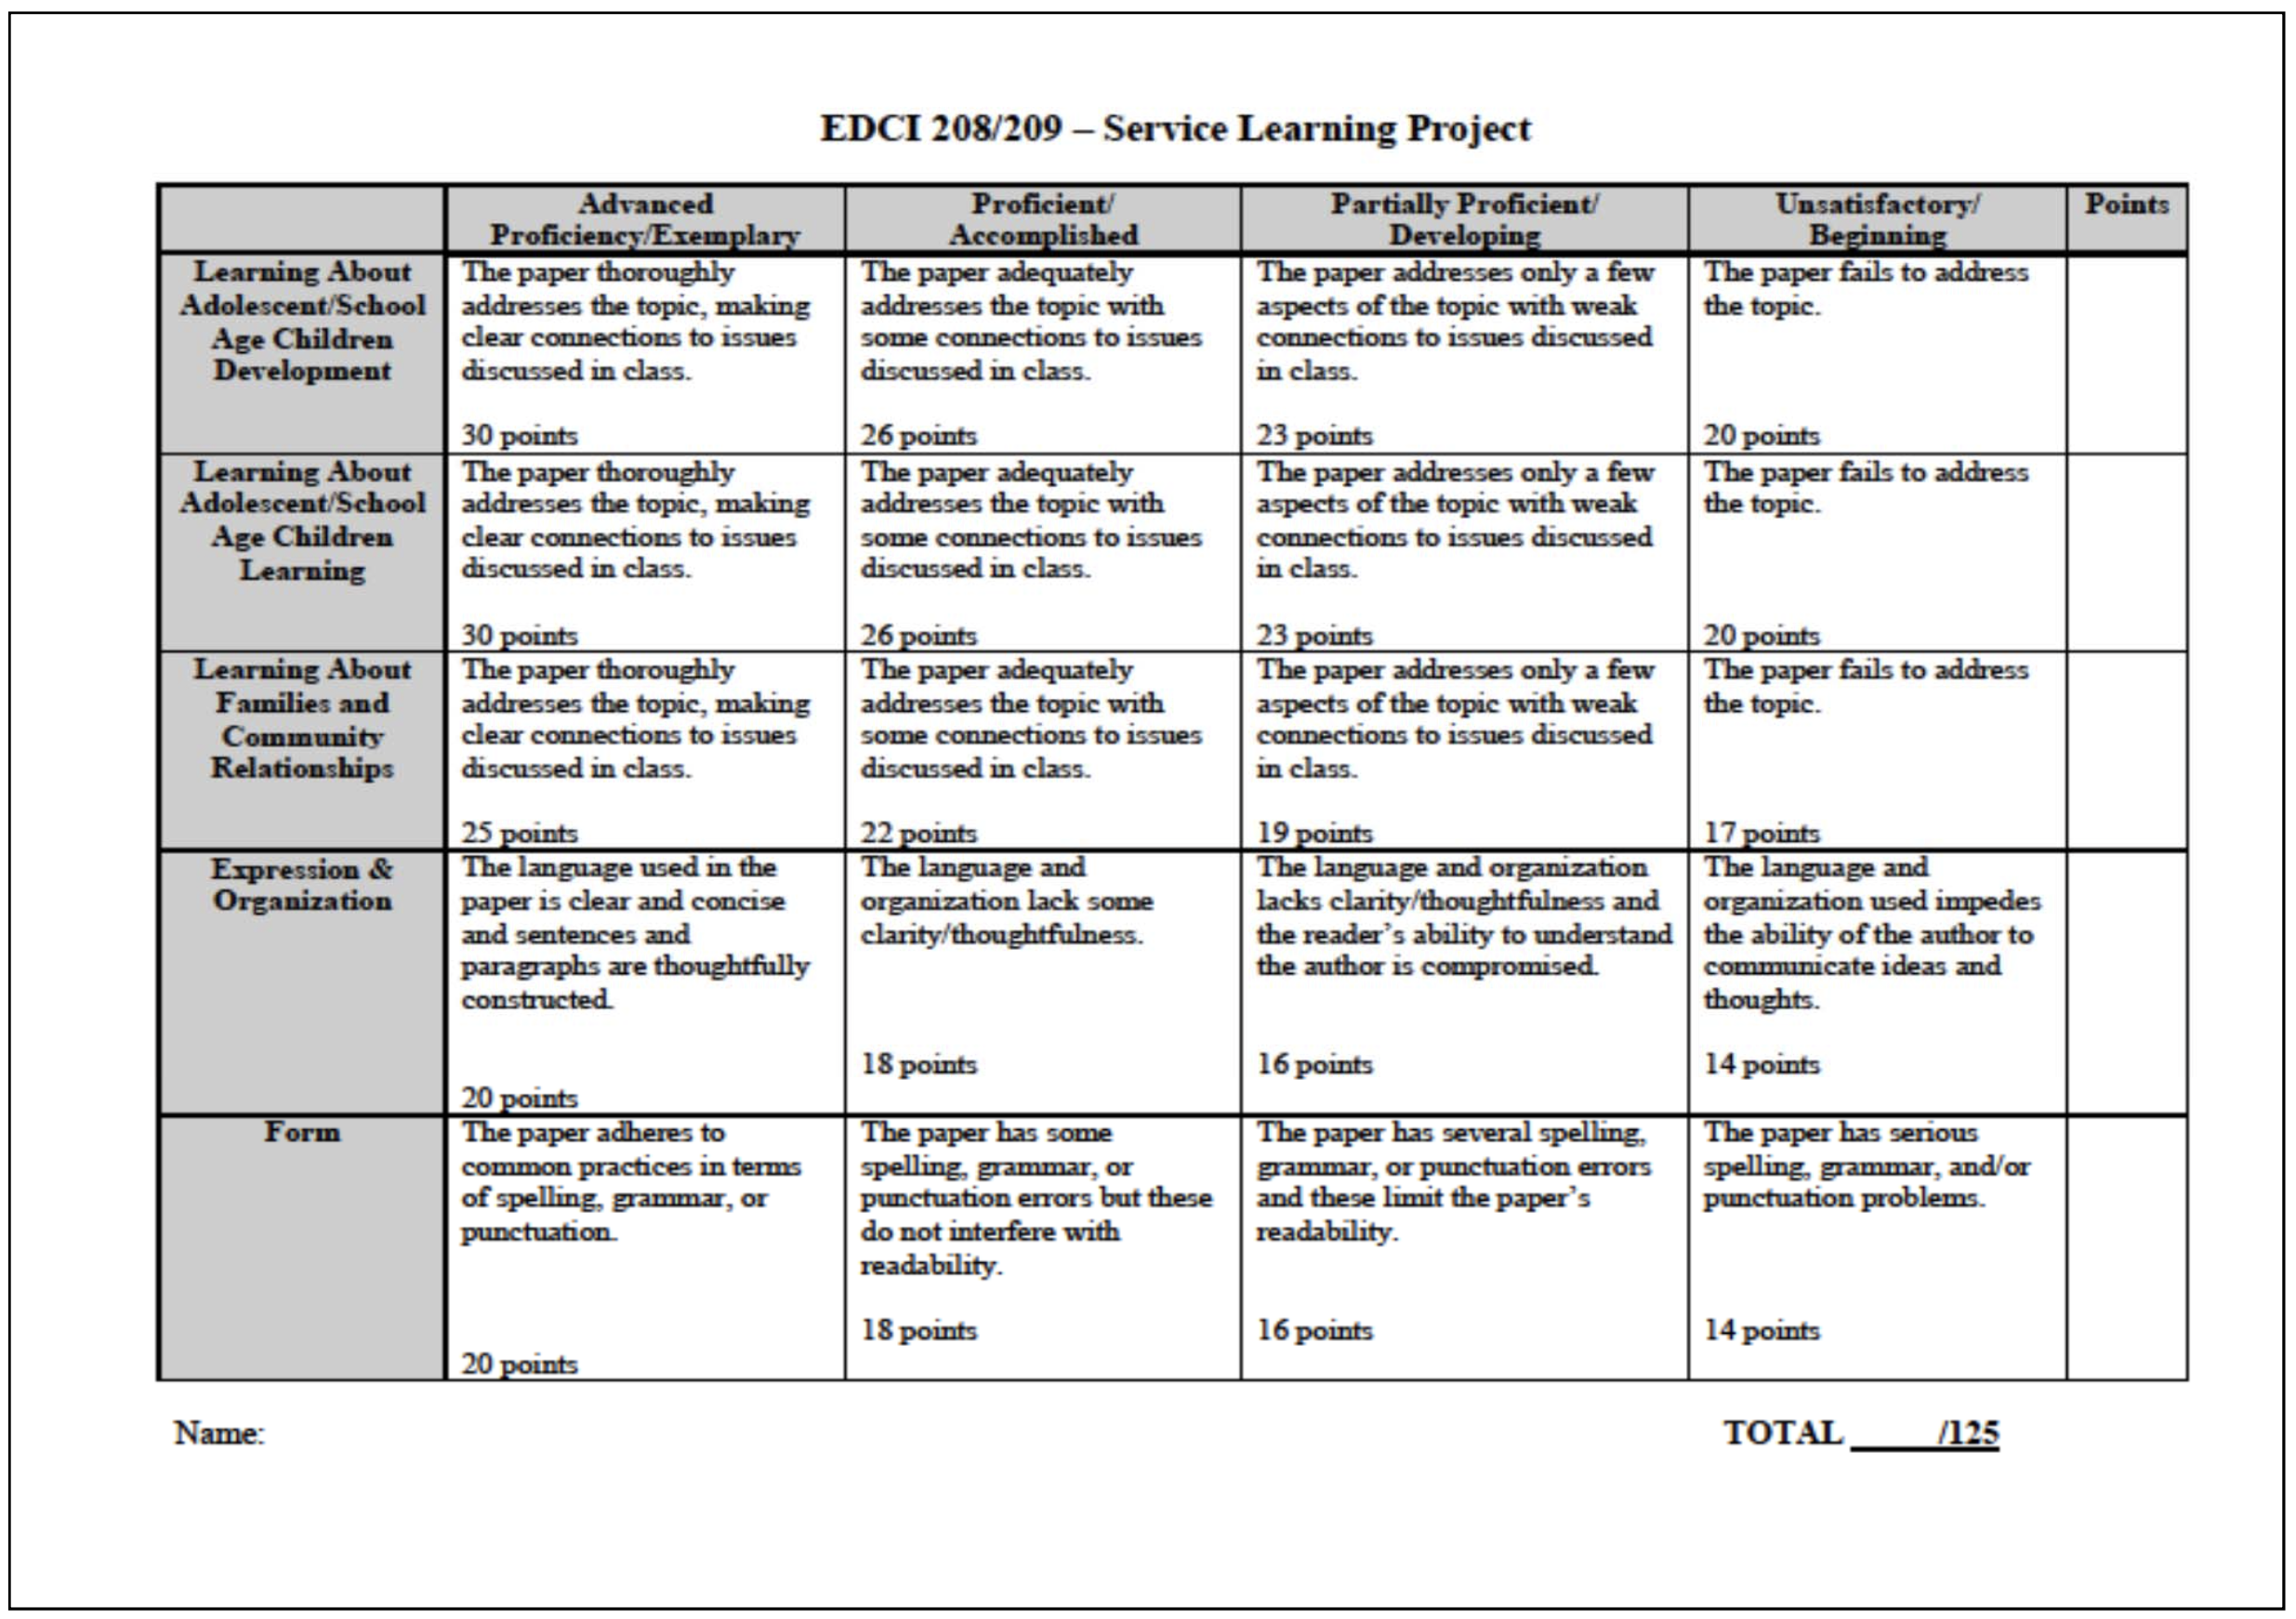 EDCI 208/209 Service Learning Project, Scoring Rubric